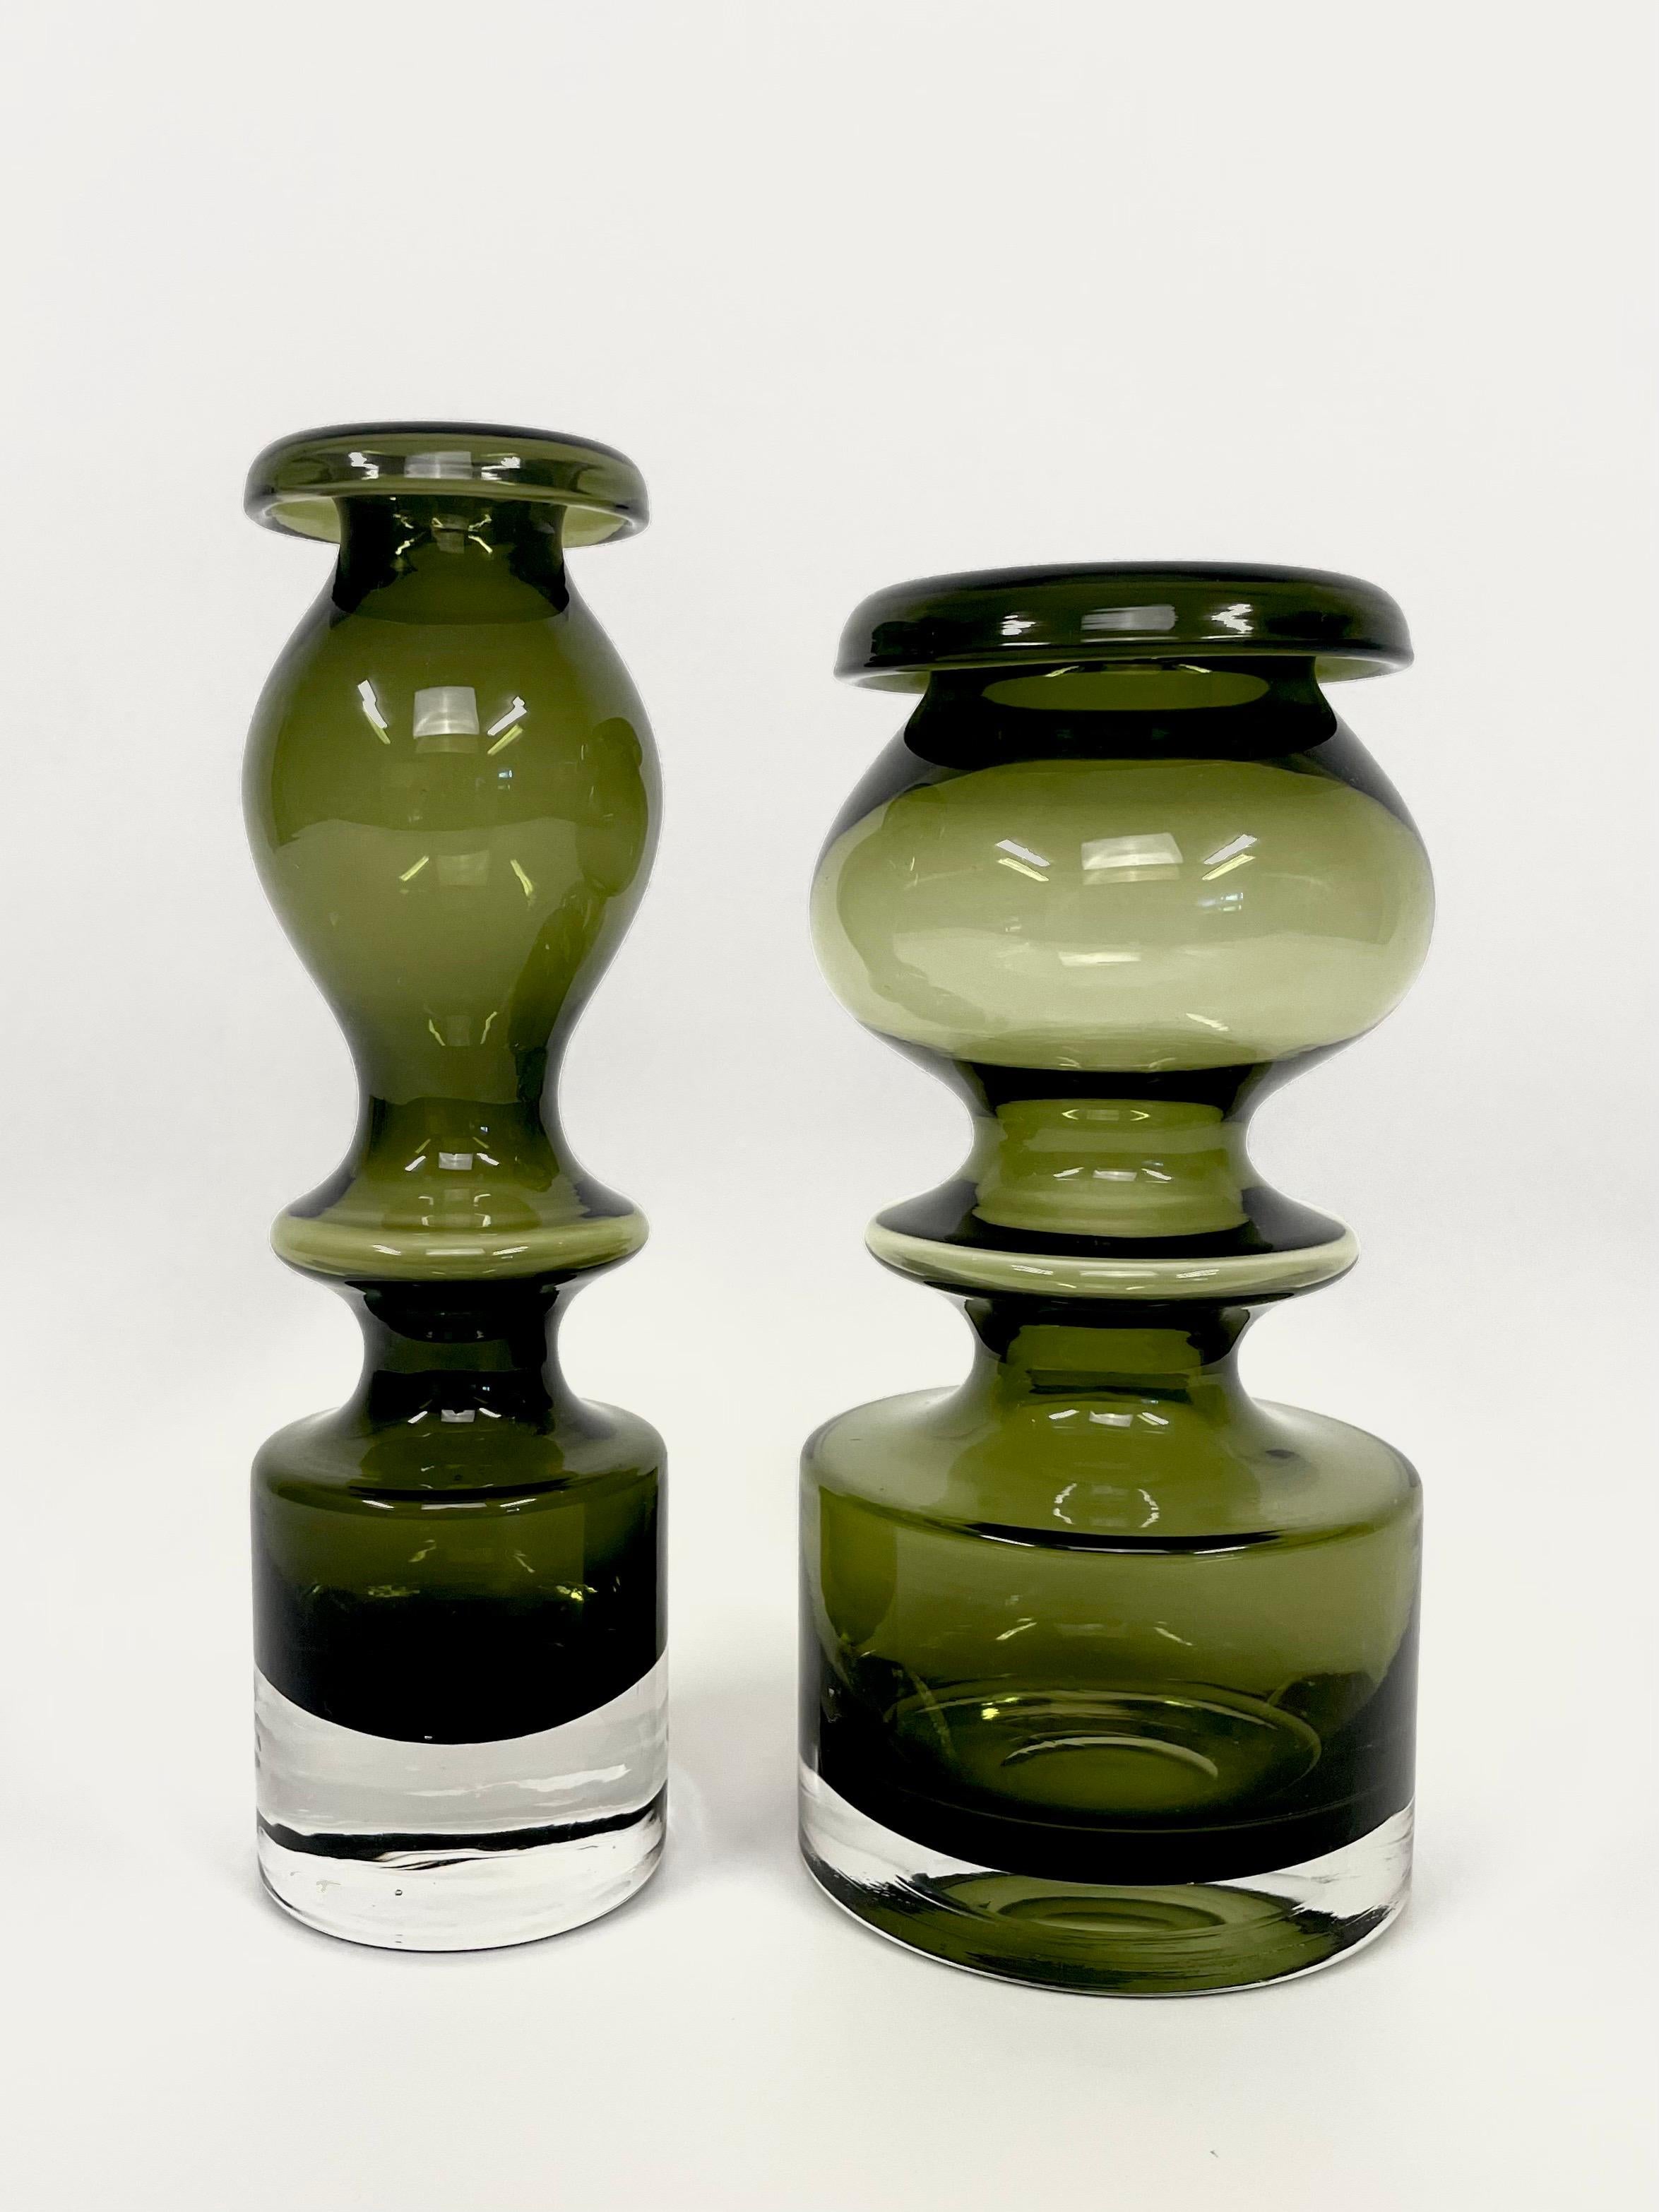 Scandinavian Modern Five Pompadour Vases Collection by Finnish Designer Nanny Still for Riihimäen  For Sale